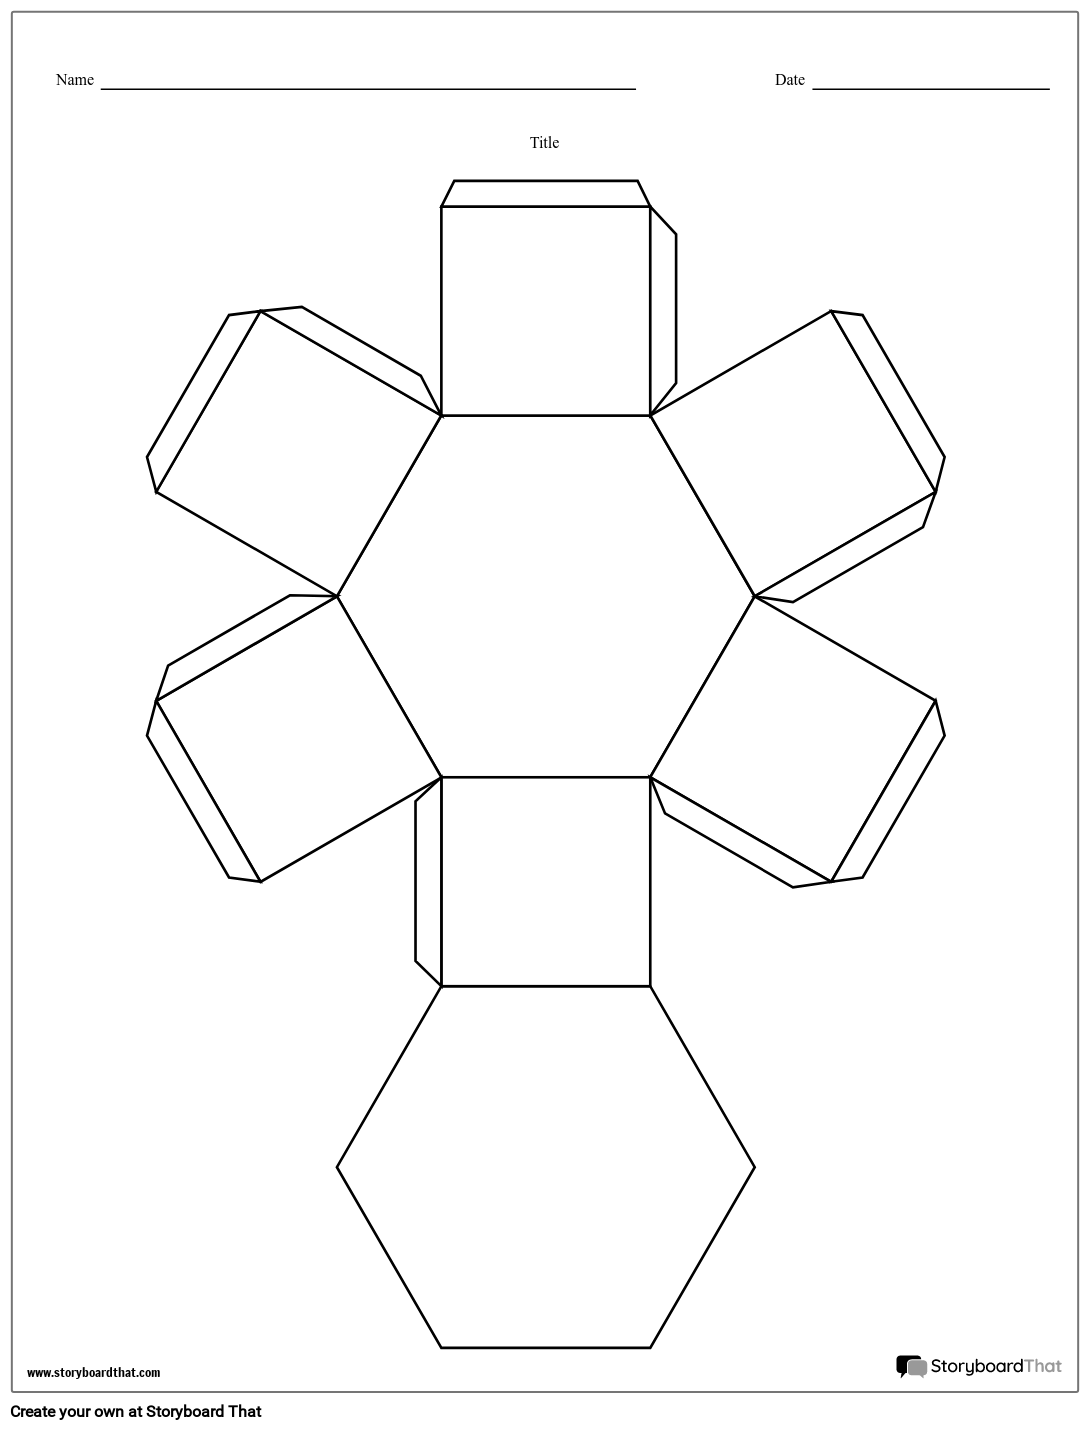 cube-net-template-pdf-pdf-template